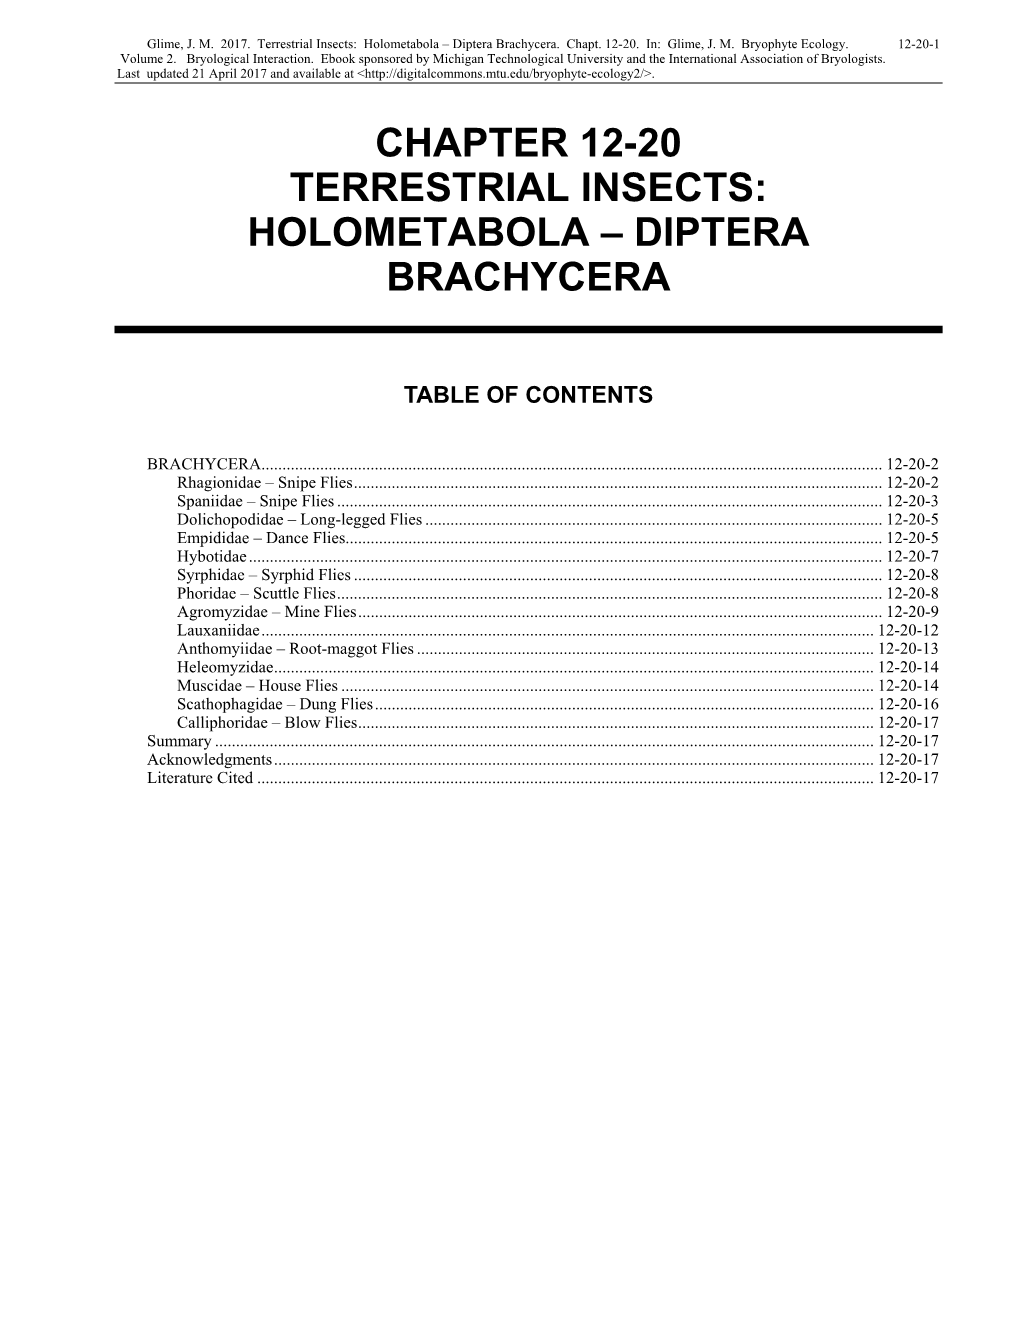 Terrestrial Insects: Holometabola – Diptera Brachycera